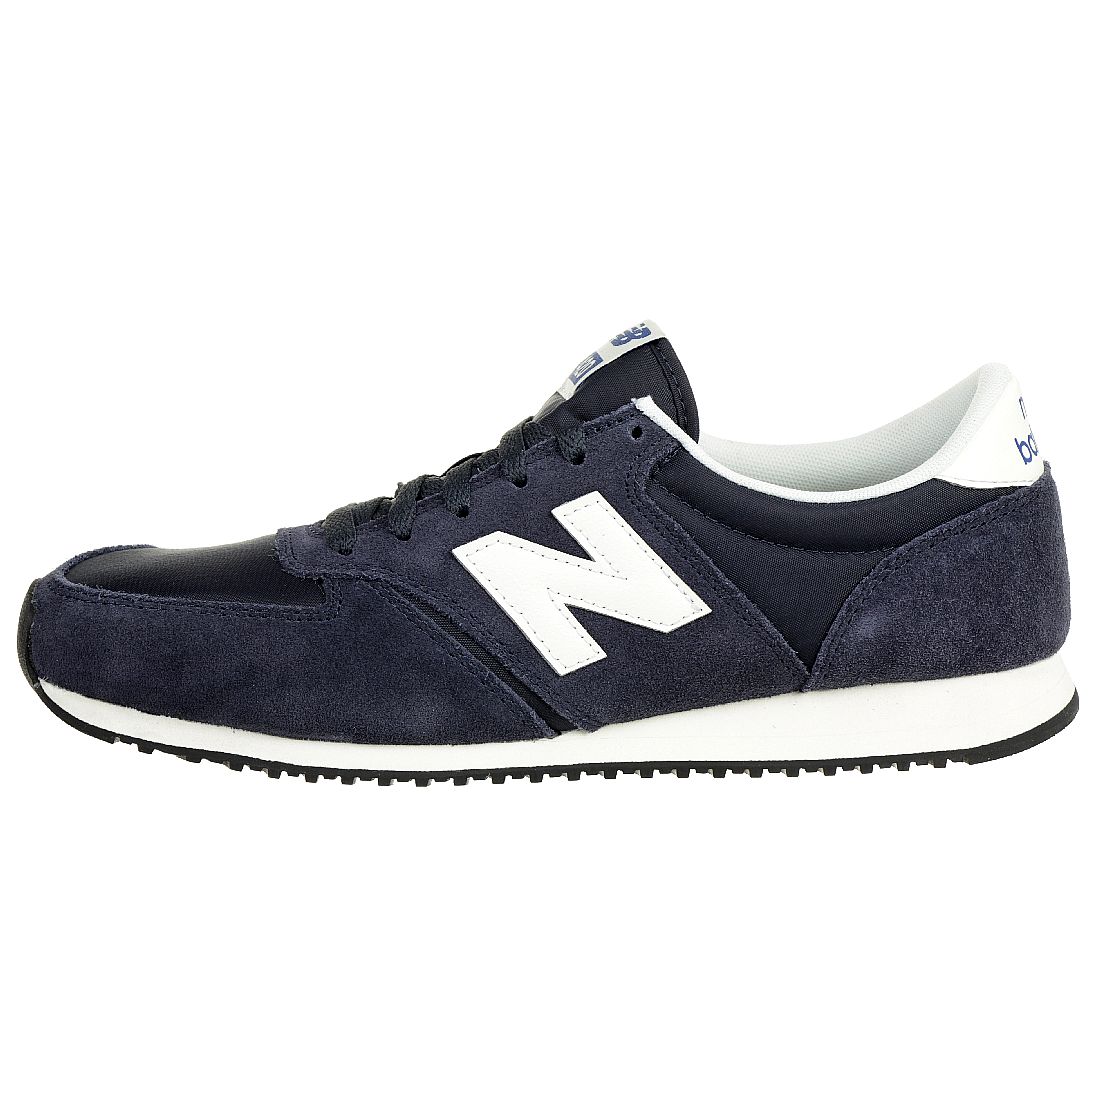 New Balance U420 NVB Classic Sneaker Herren Schuhe Navy Blau